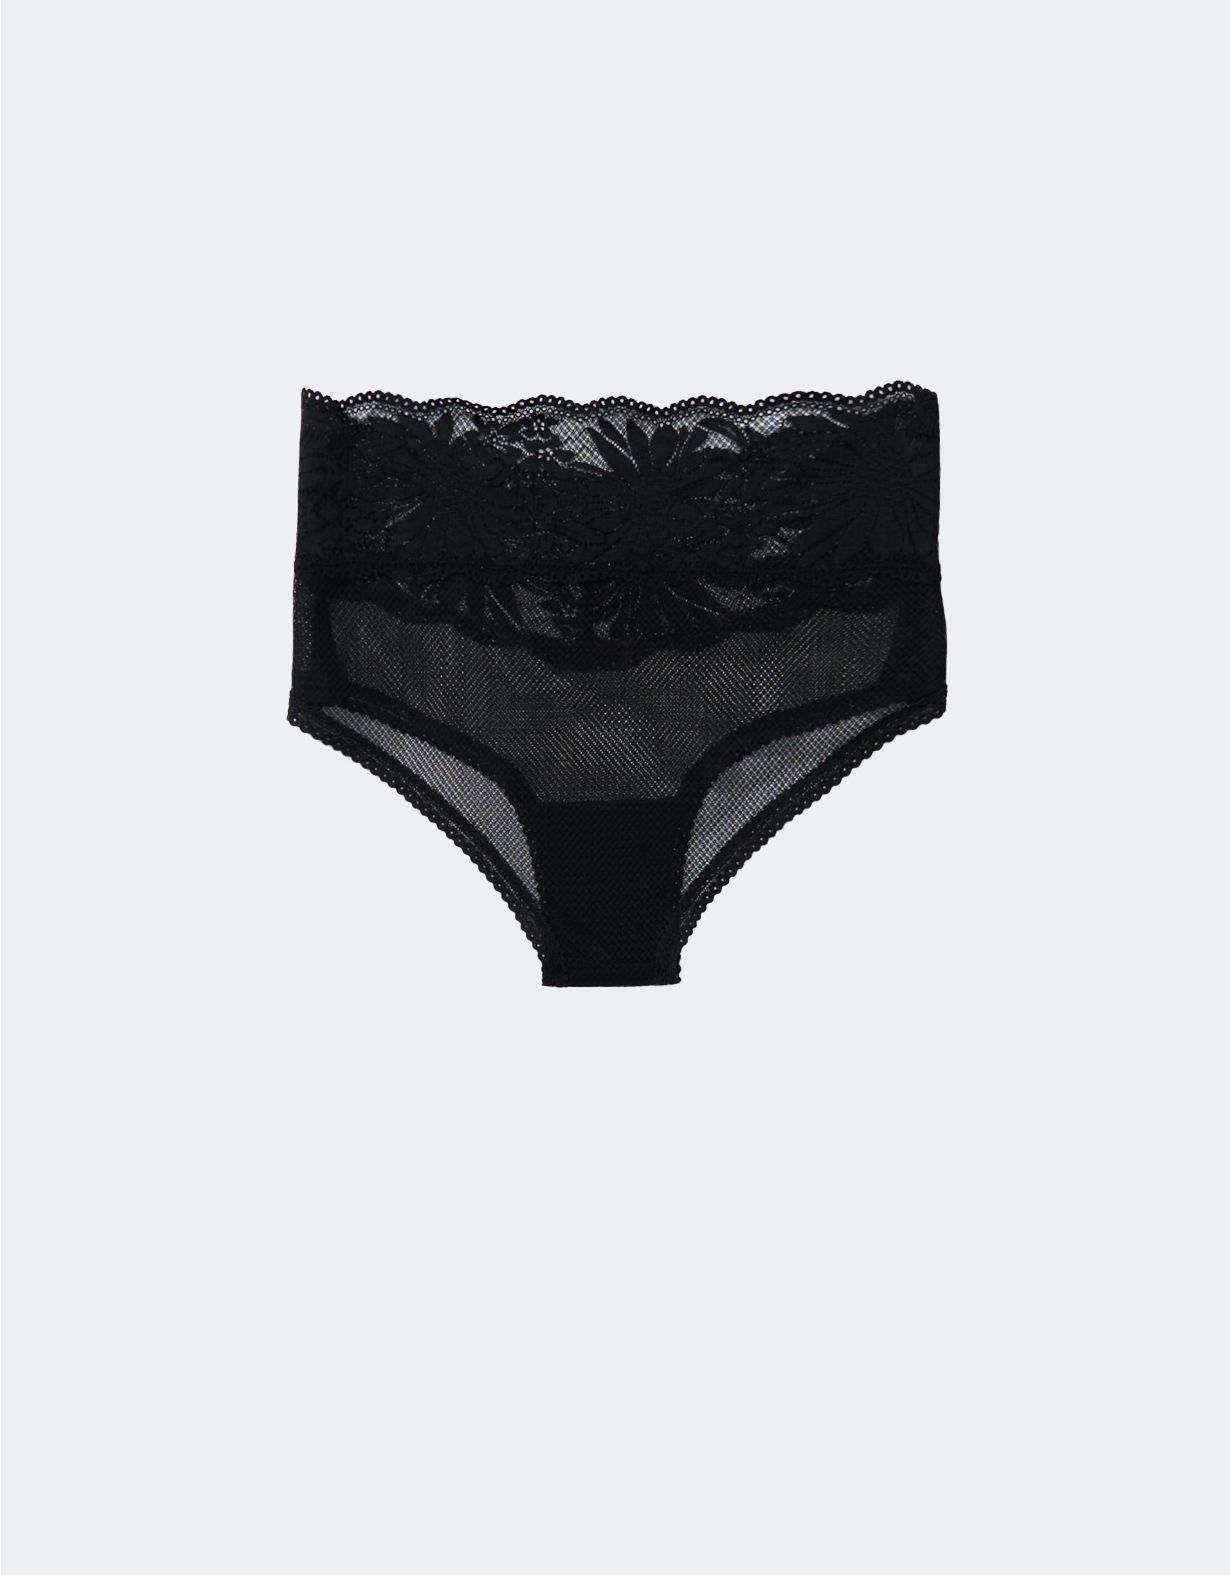 Aerie Hibiscus Lace Cheeky Underwear